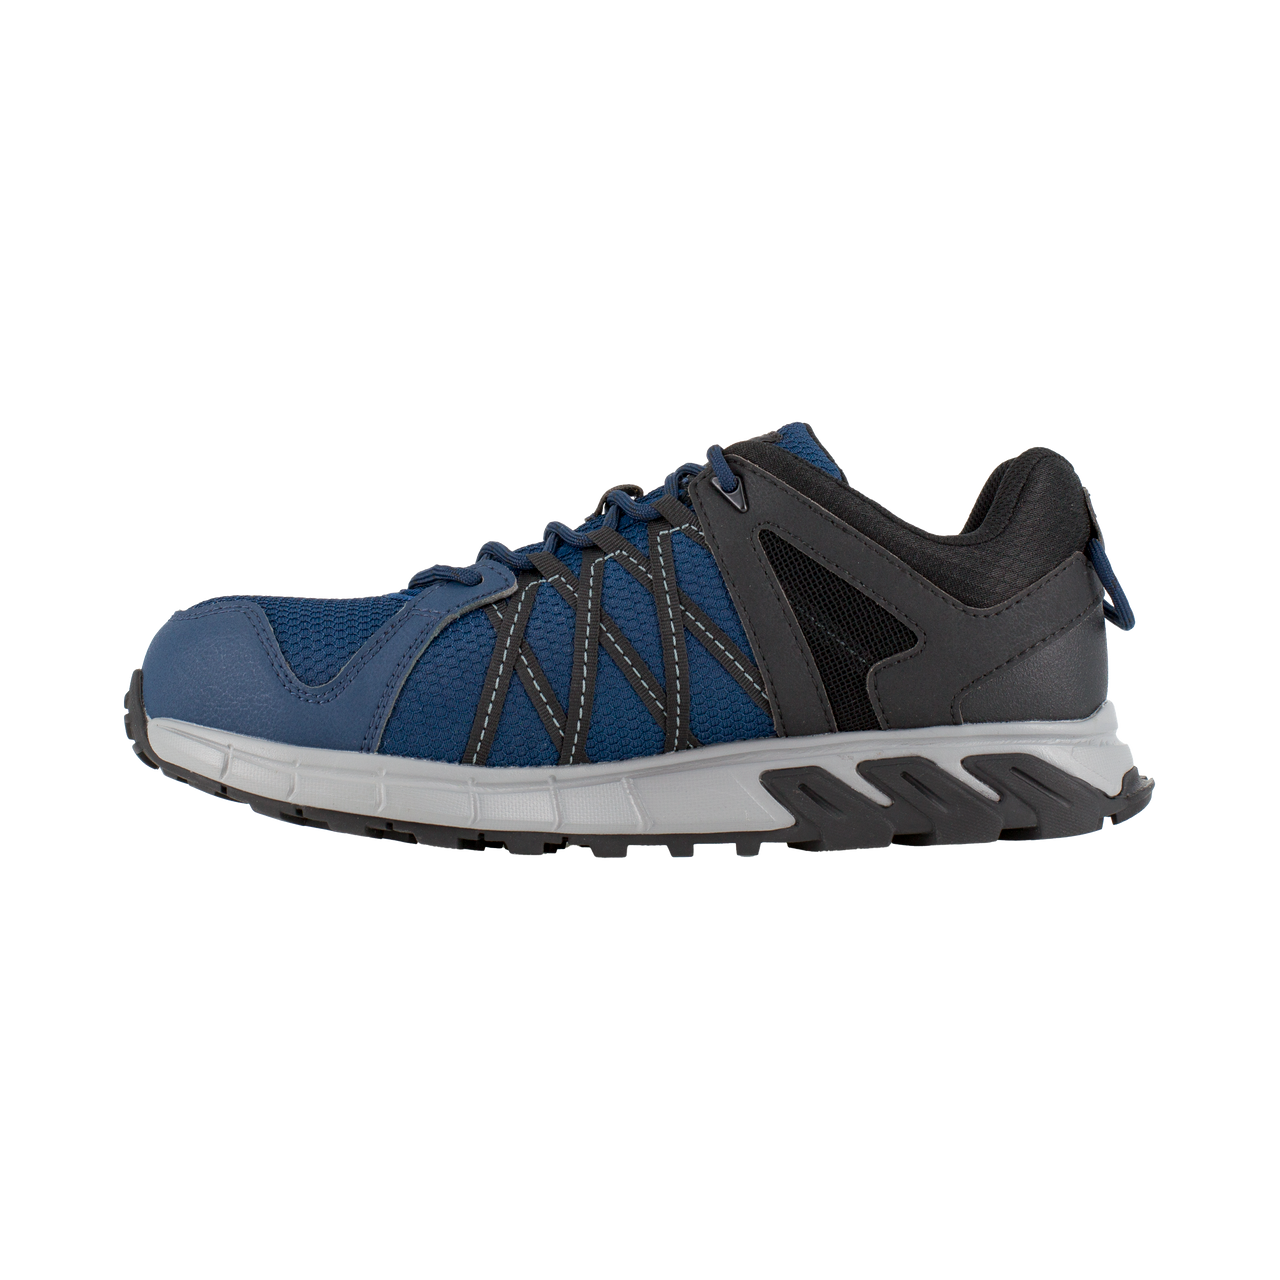 Reebok Trailgrip Work - RB3403 - Men's Athletic Work Shoes - Microweb